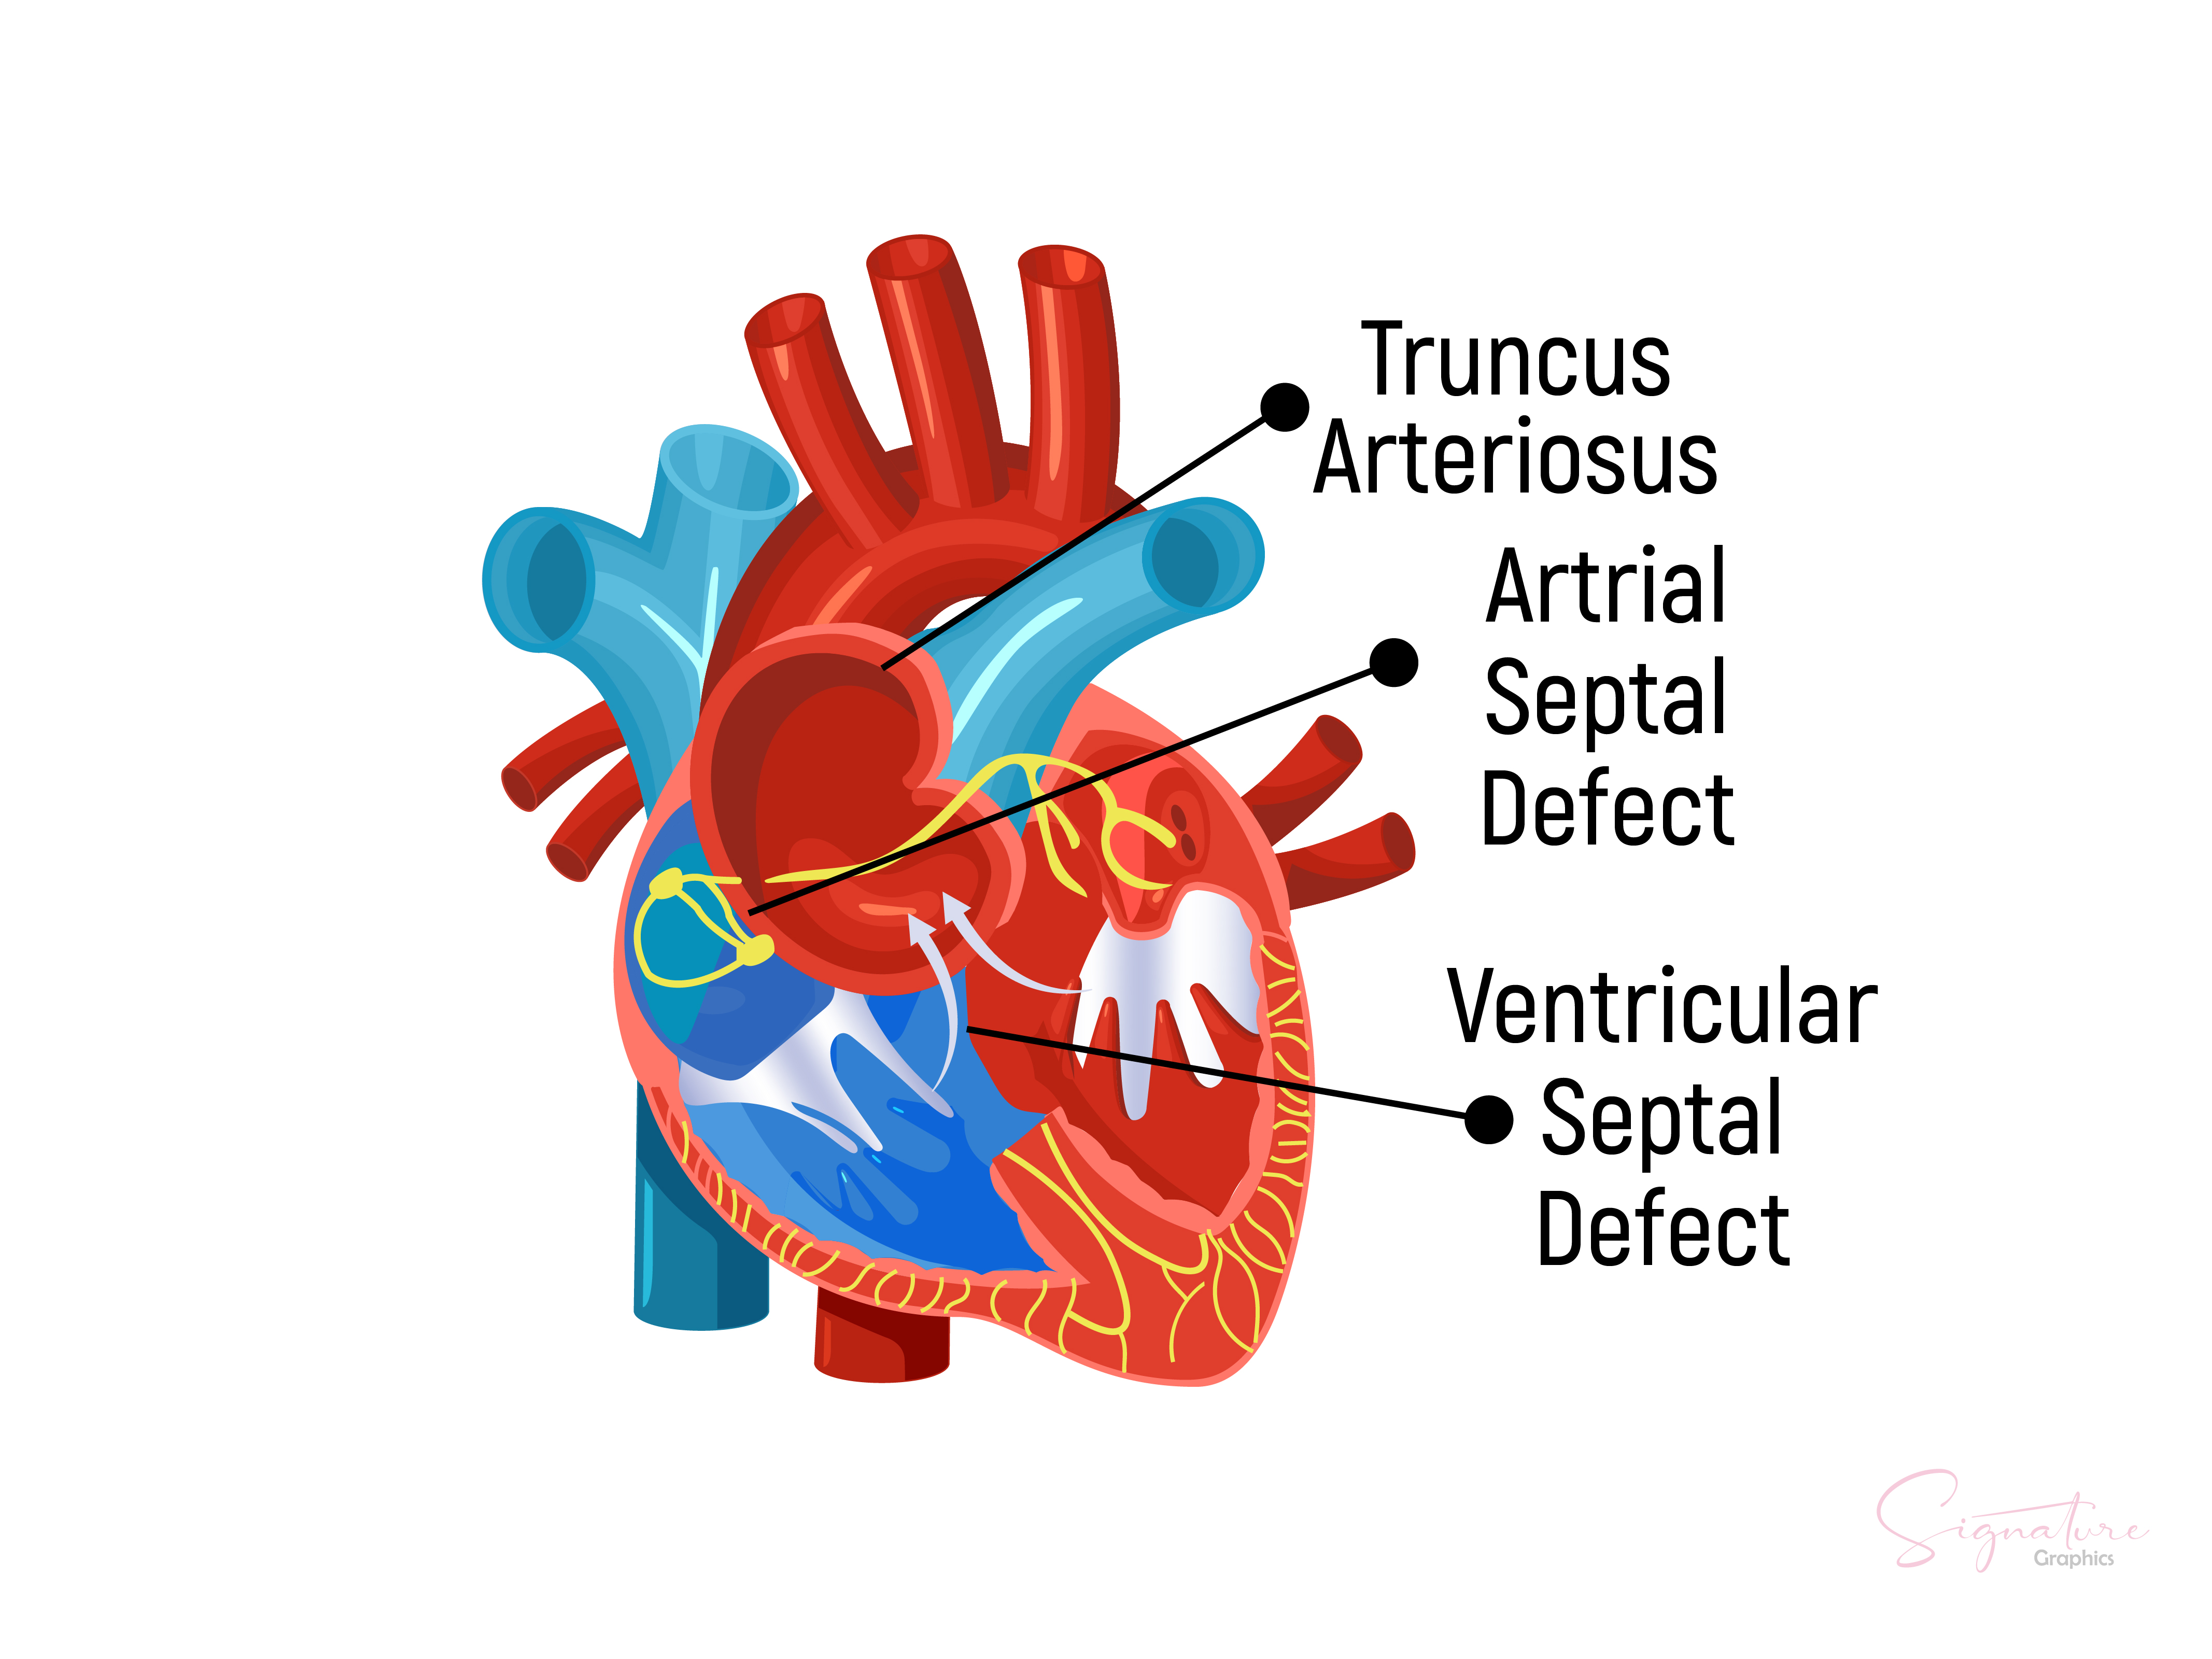 This image illustrates atrial septal defect, ventricle septal defect, and truncus arteriosus.